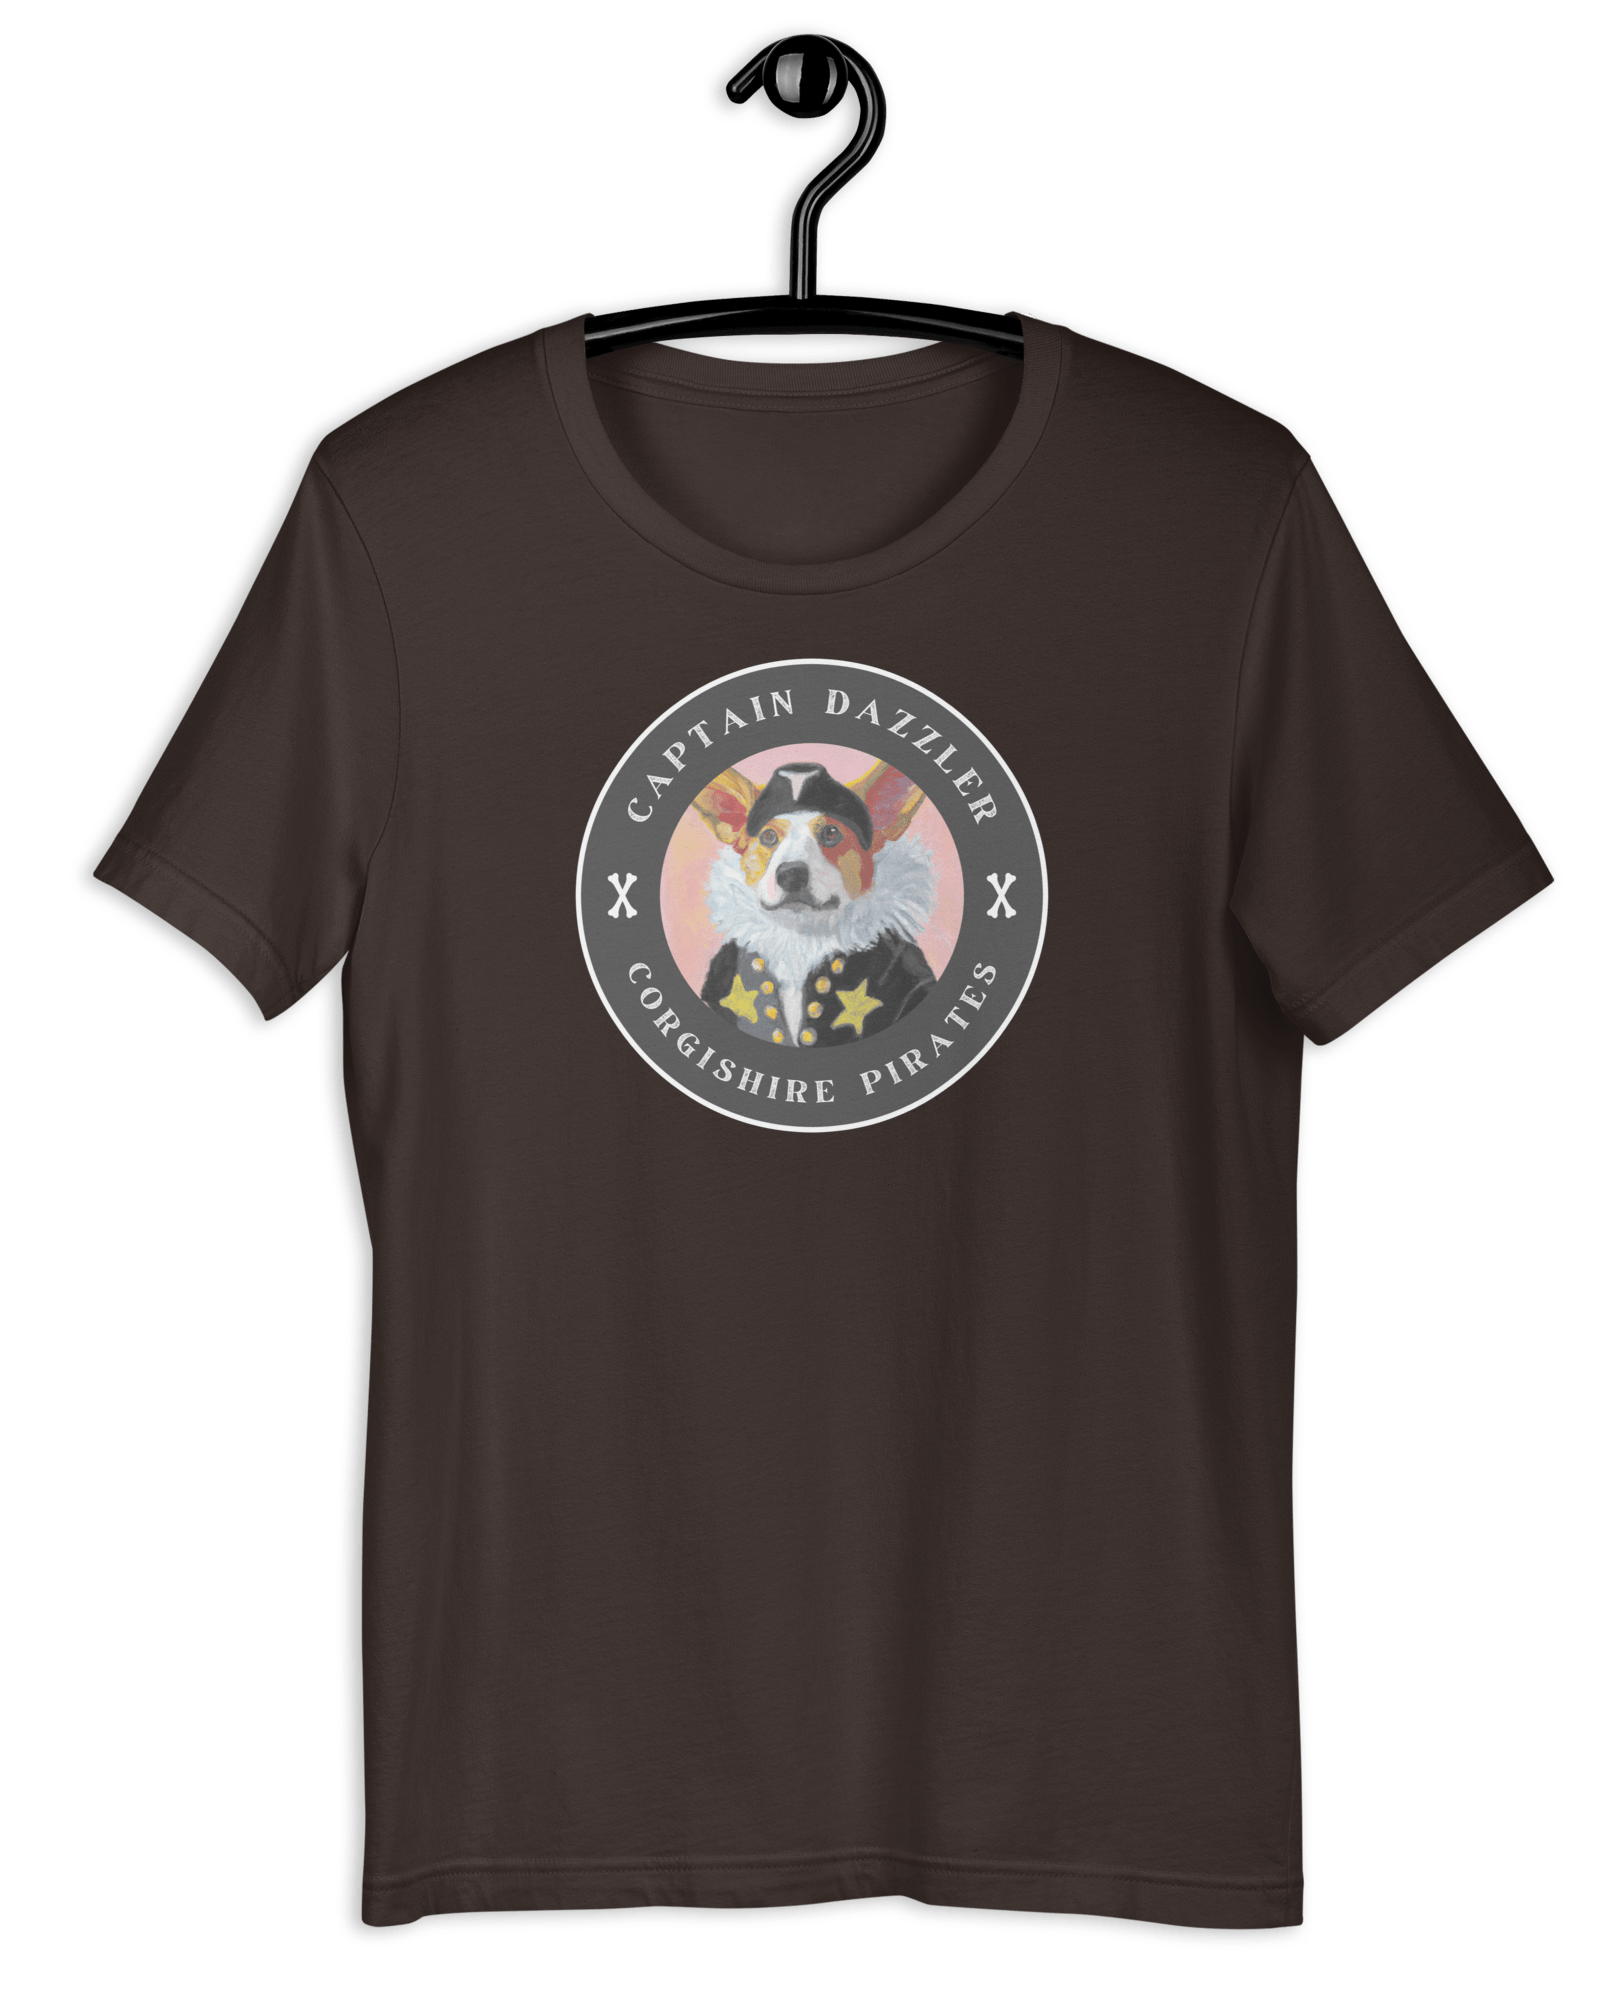 Captain Dazzler Corgishire Pirates T-shirt Brown / S Shirts & Tops Jolly & Goode